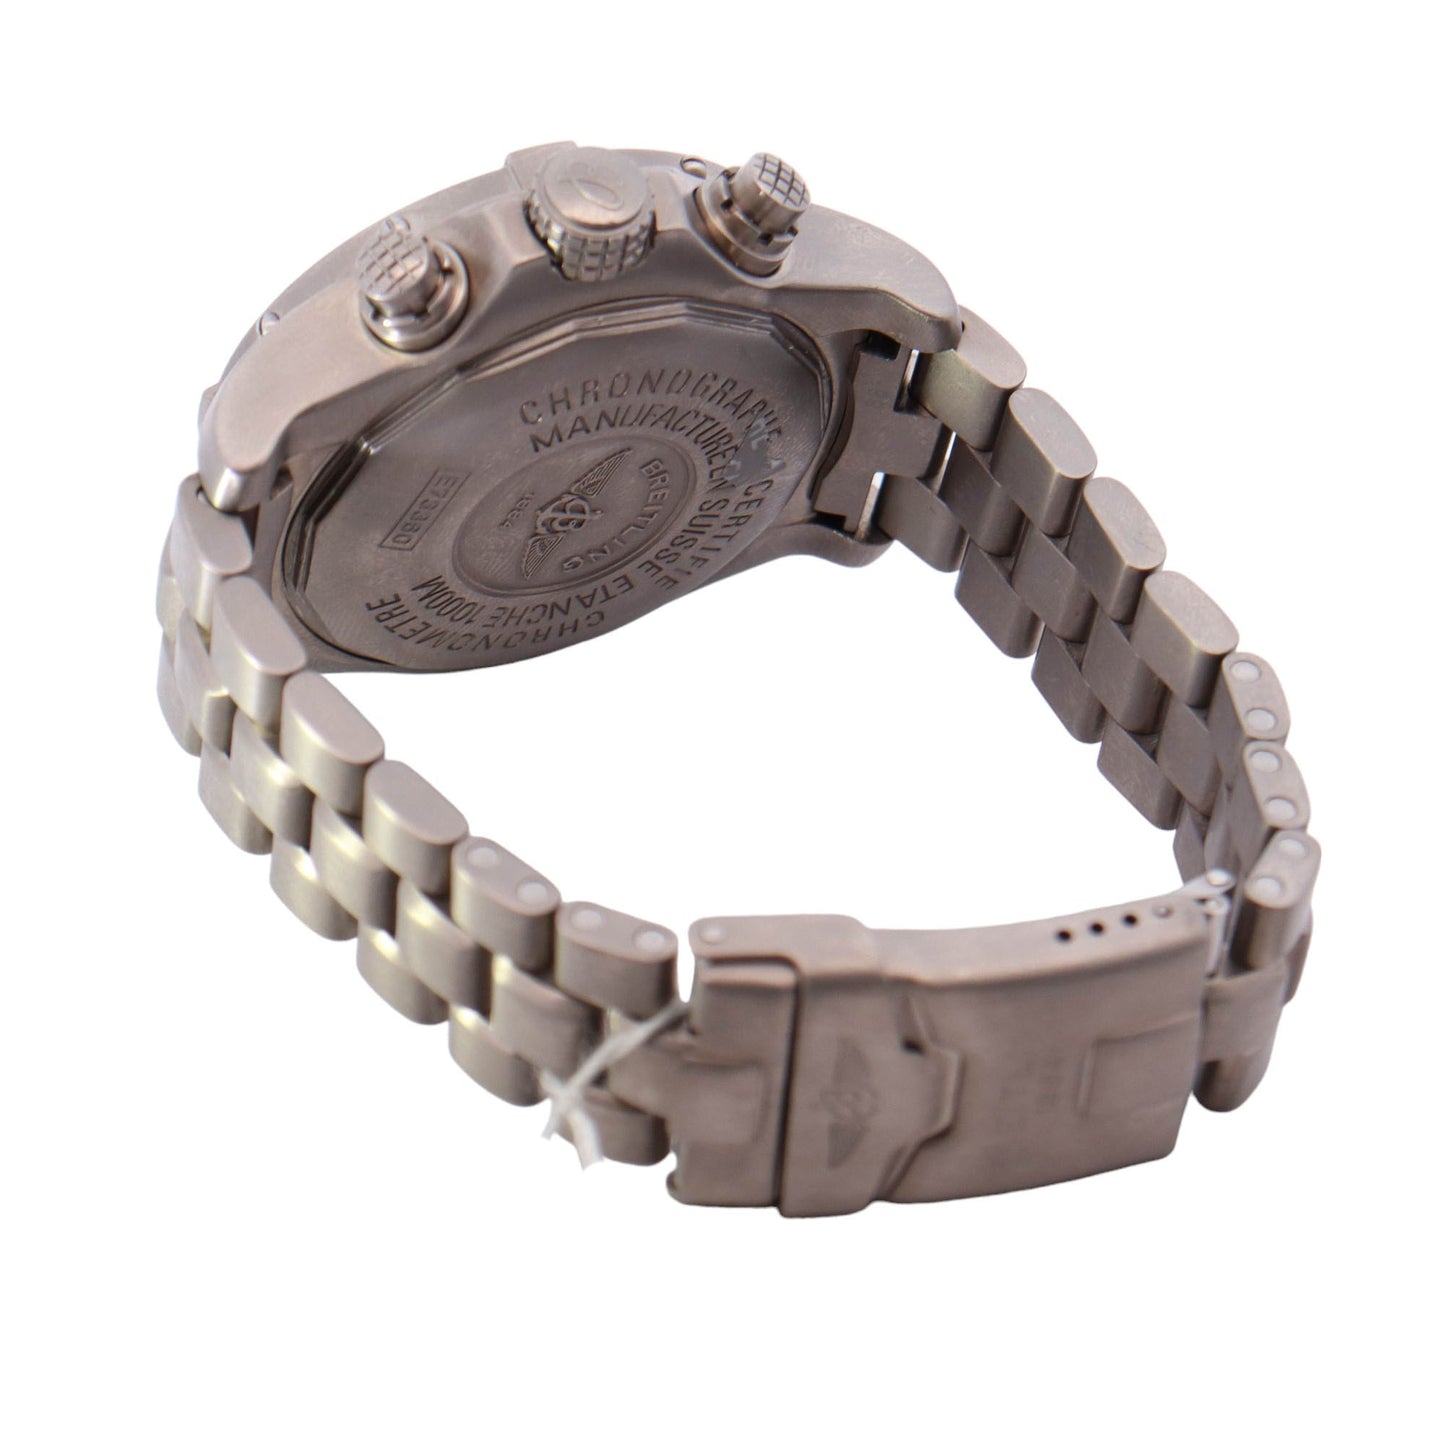 Breitling Avenger Titanium 44mm Grey Arabic Dial Watch Reference# E73360 - Happy Jewelers Fine Jewelry Lifetime Warranty